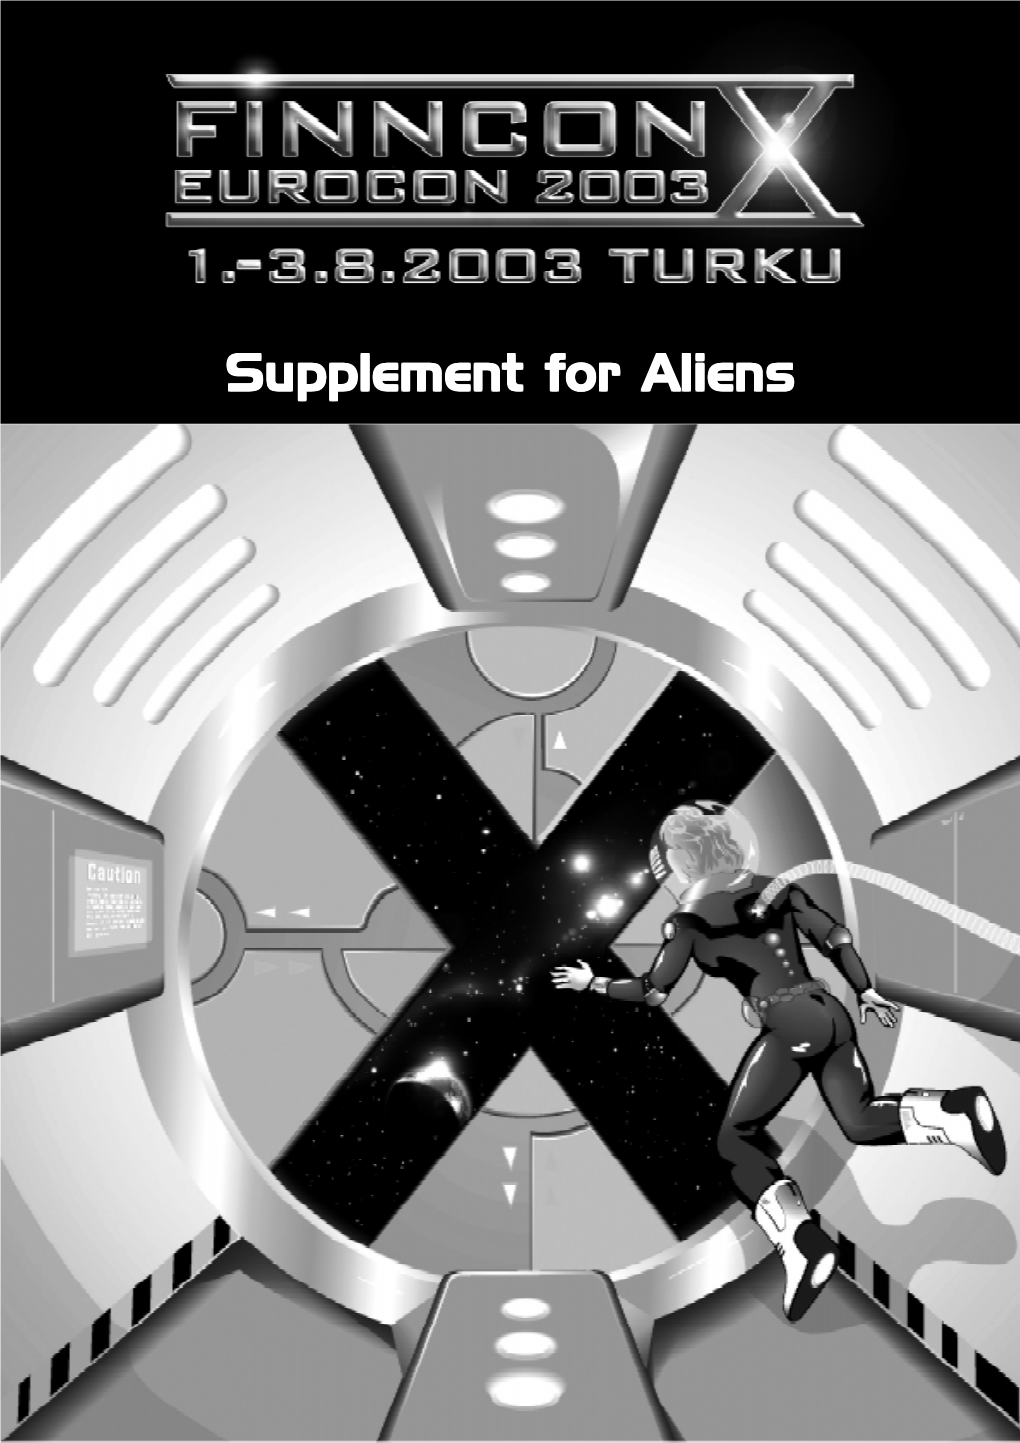 Supplement for Aliens